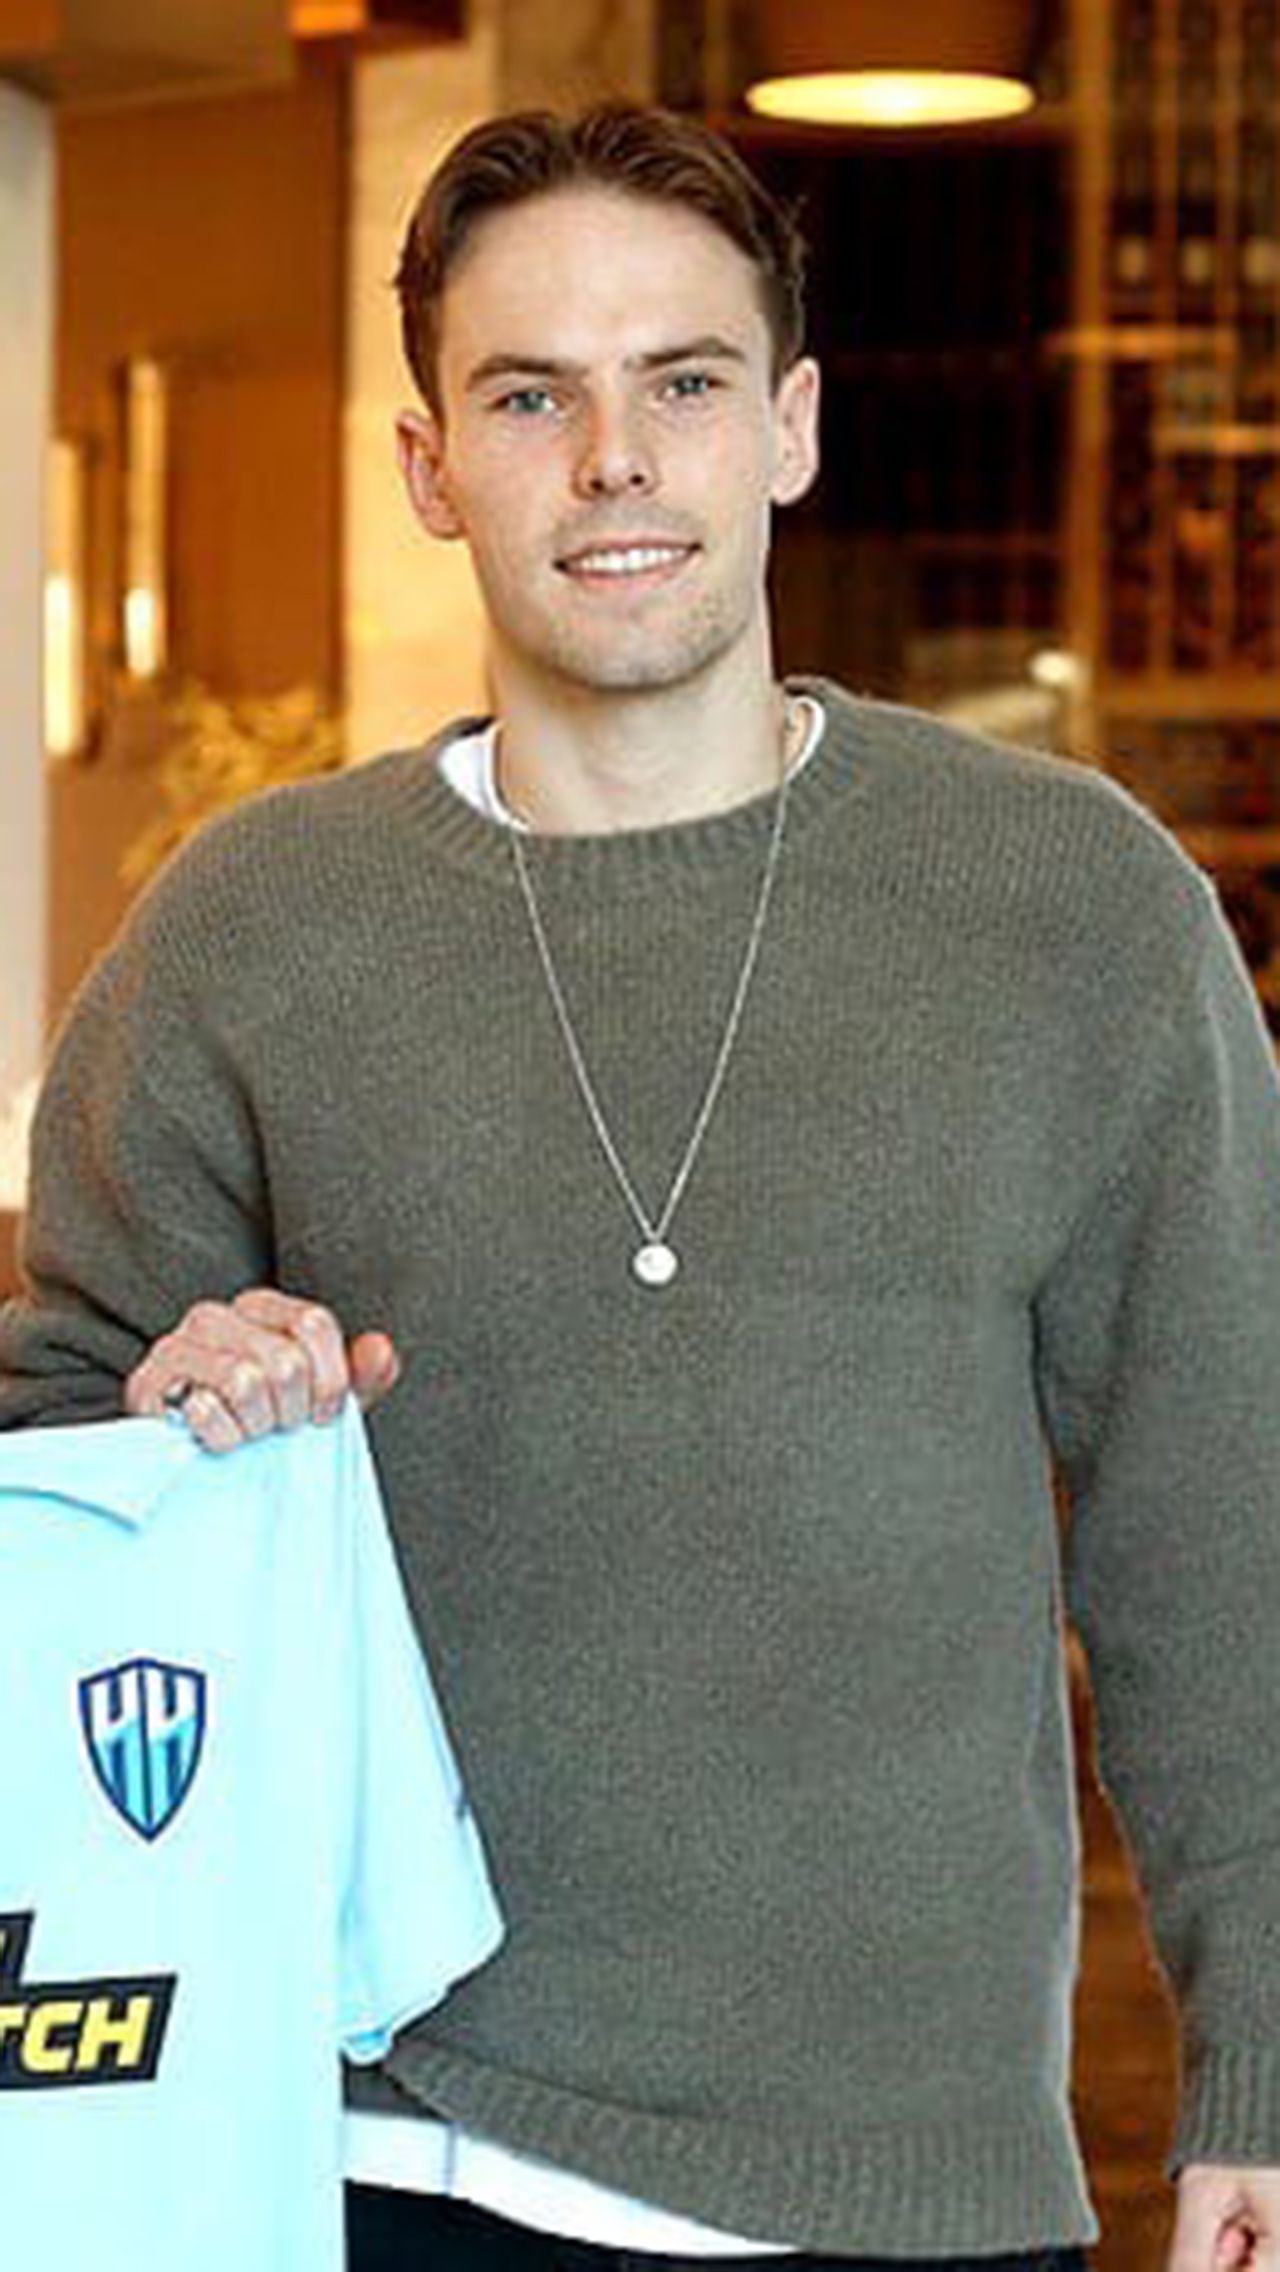 Ларс Олден Ларсен, полузащитник. Перешёл из «Мьёндалена» за € 400 тыс.